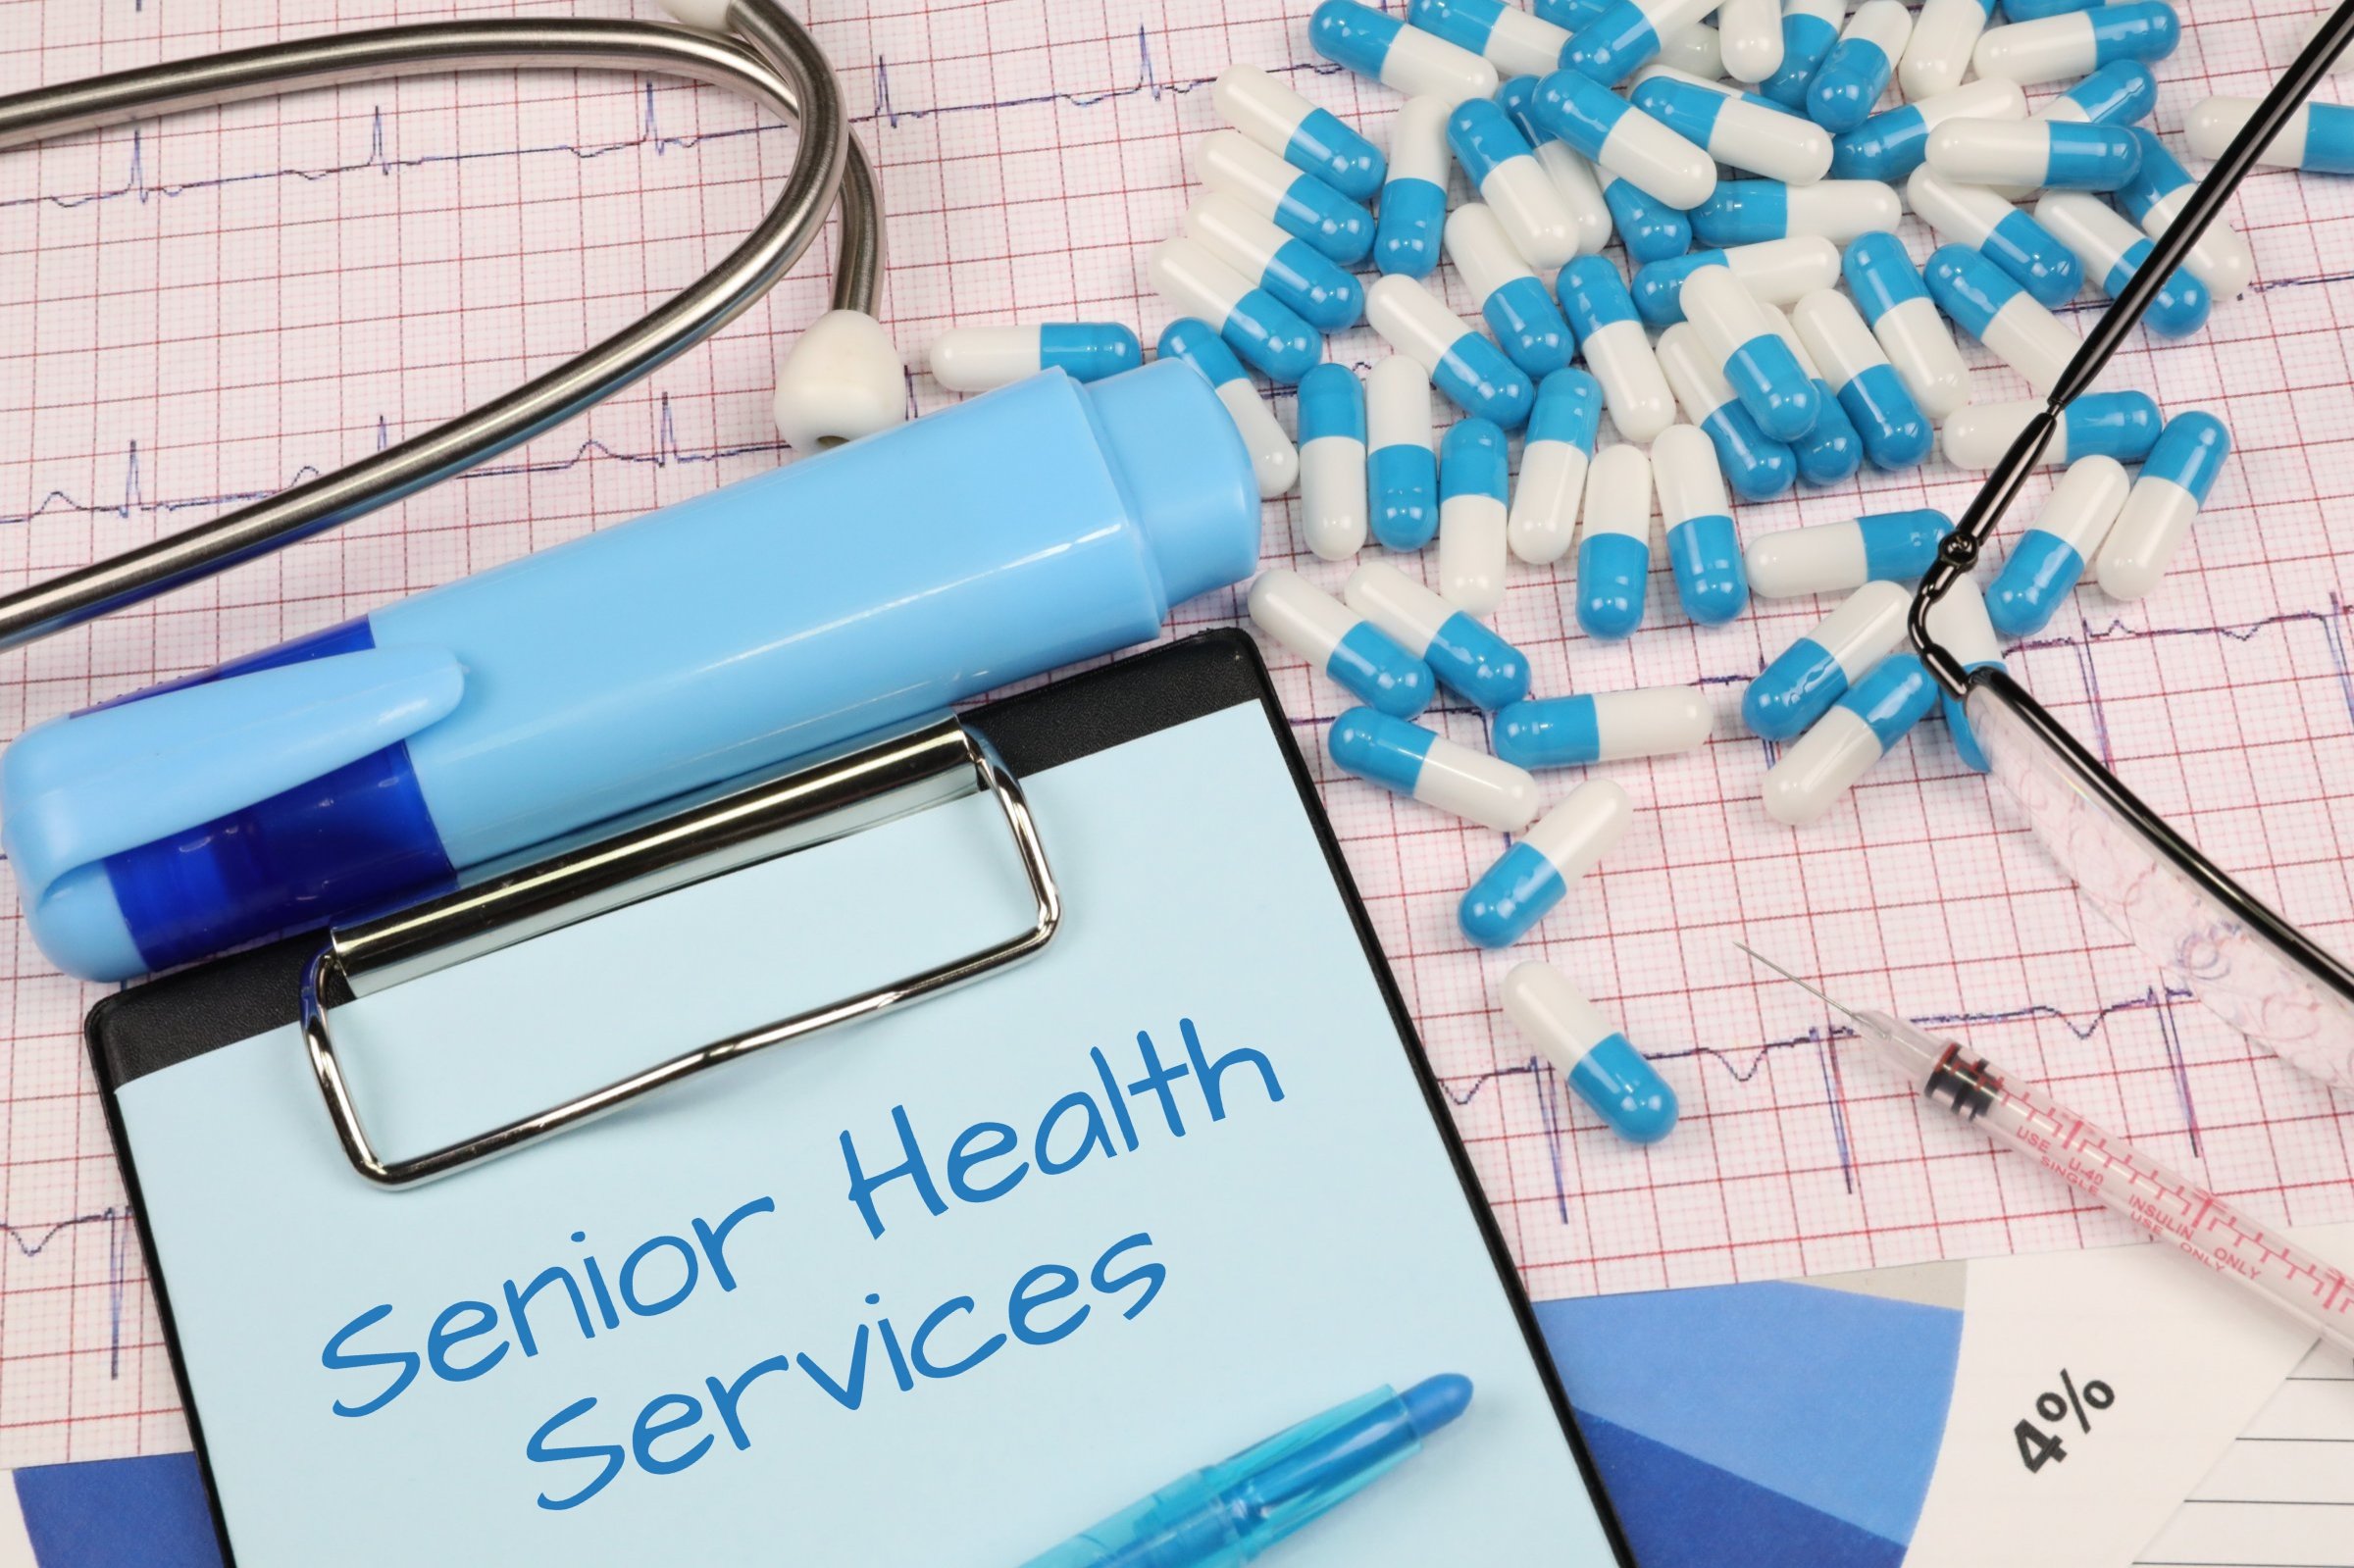 senior health services